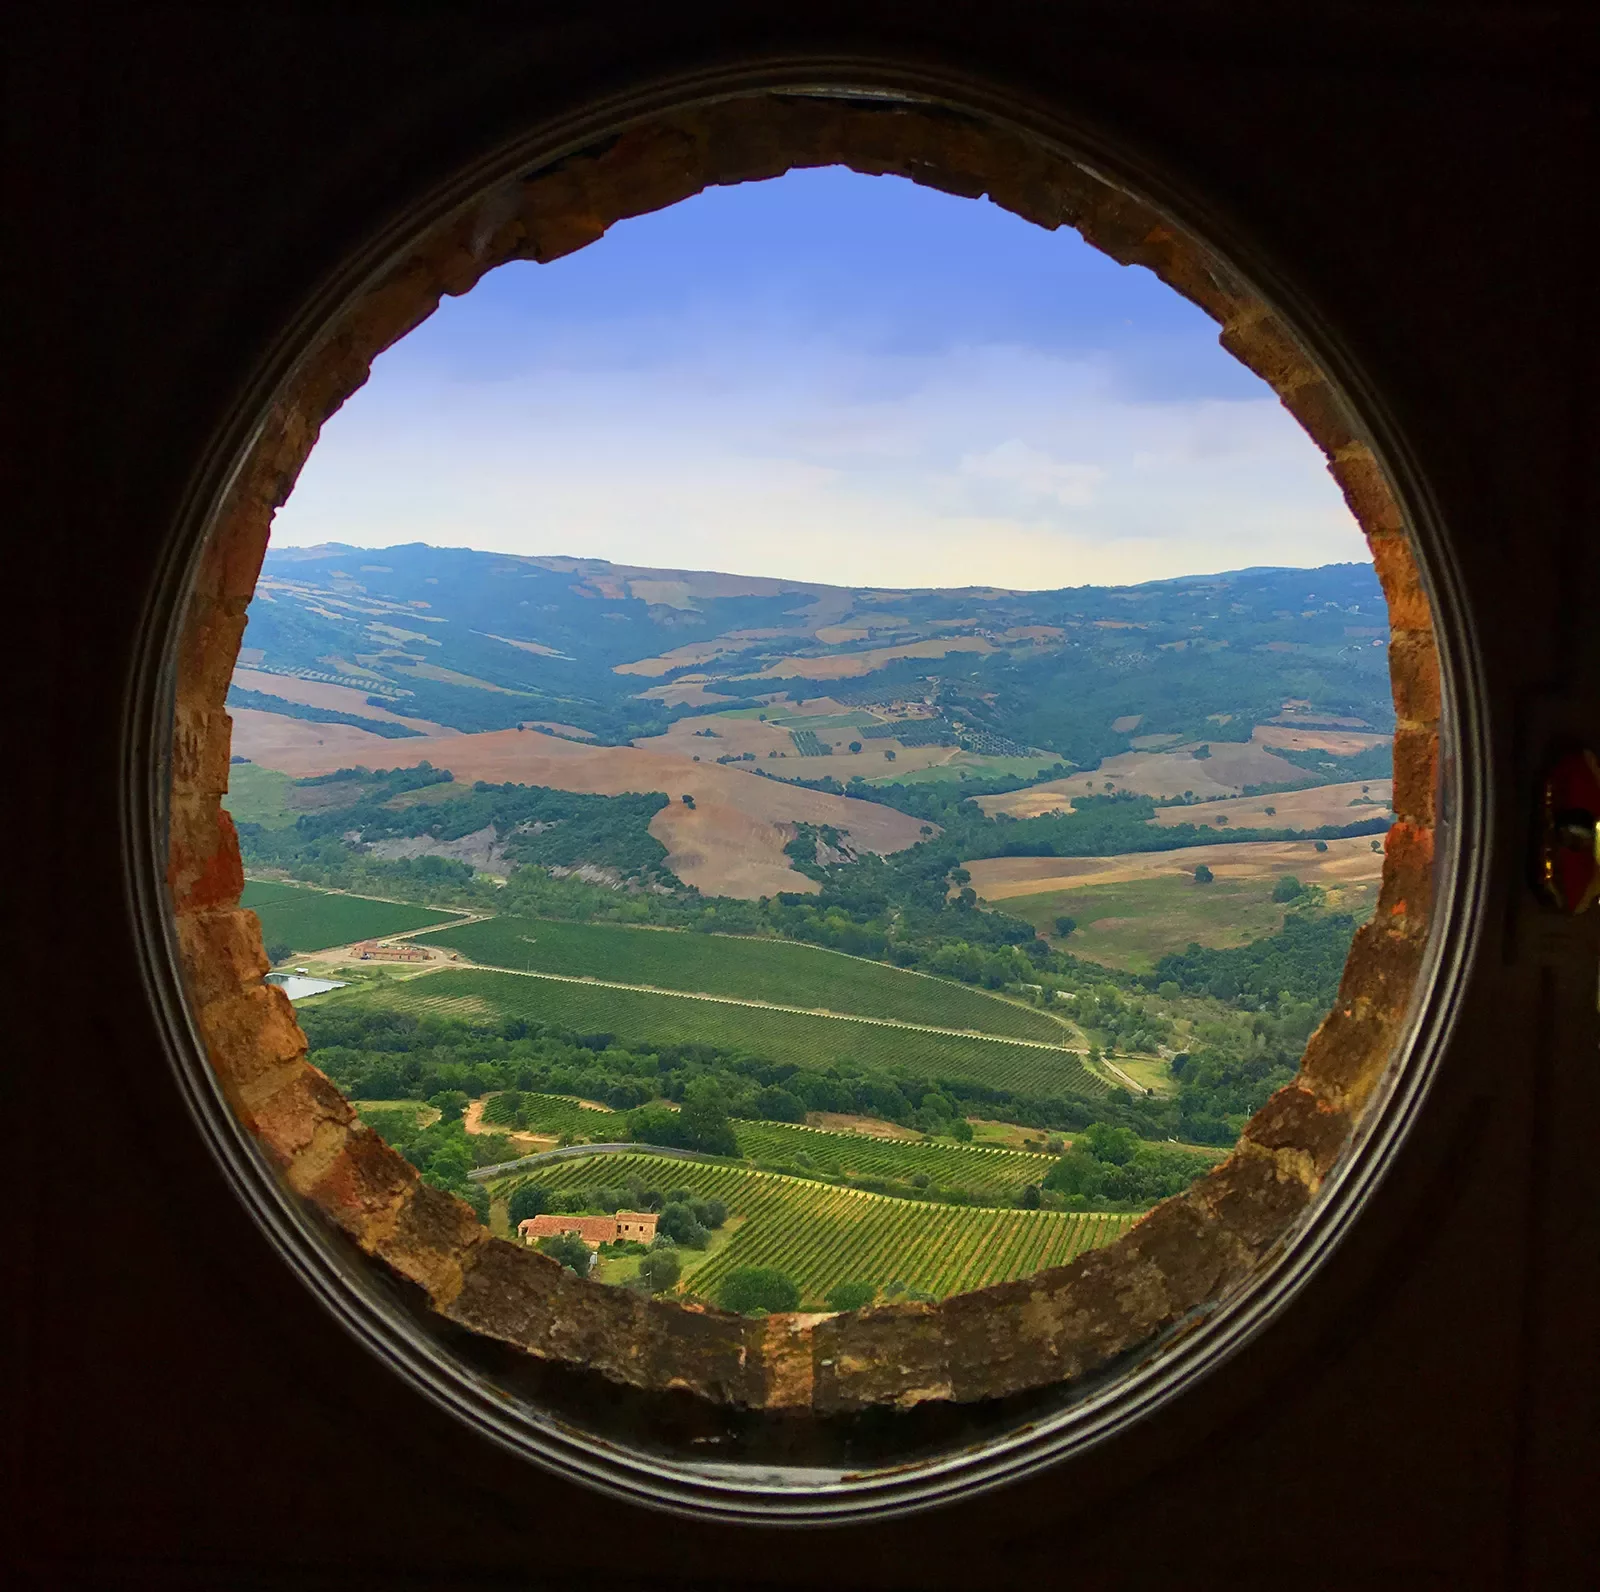 Circular window overlooking Italian countryside.